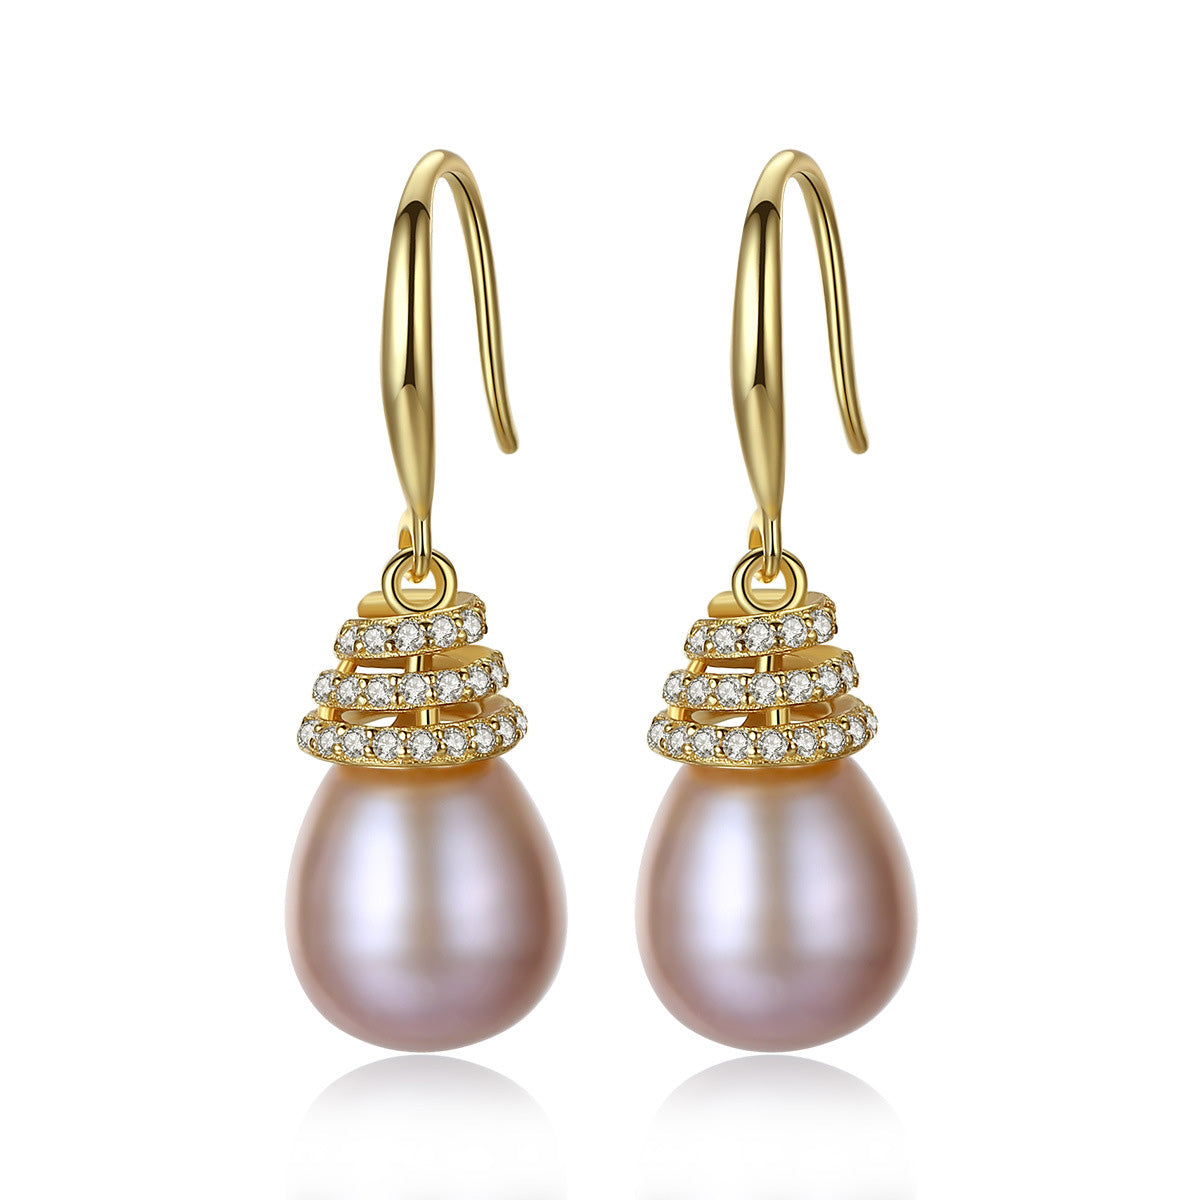 Antique Pearl Earrings - HERS